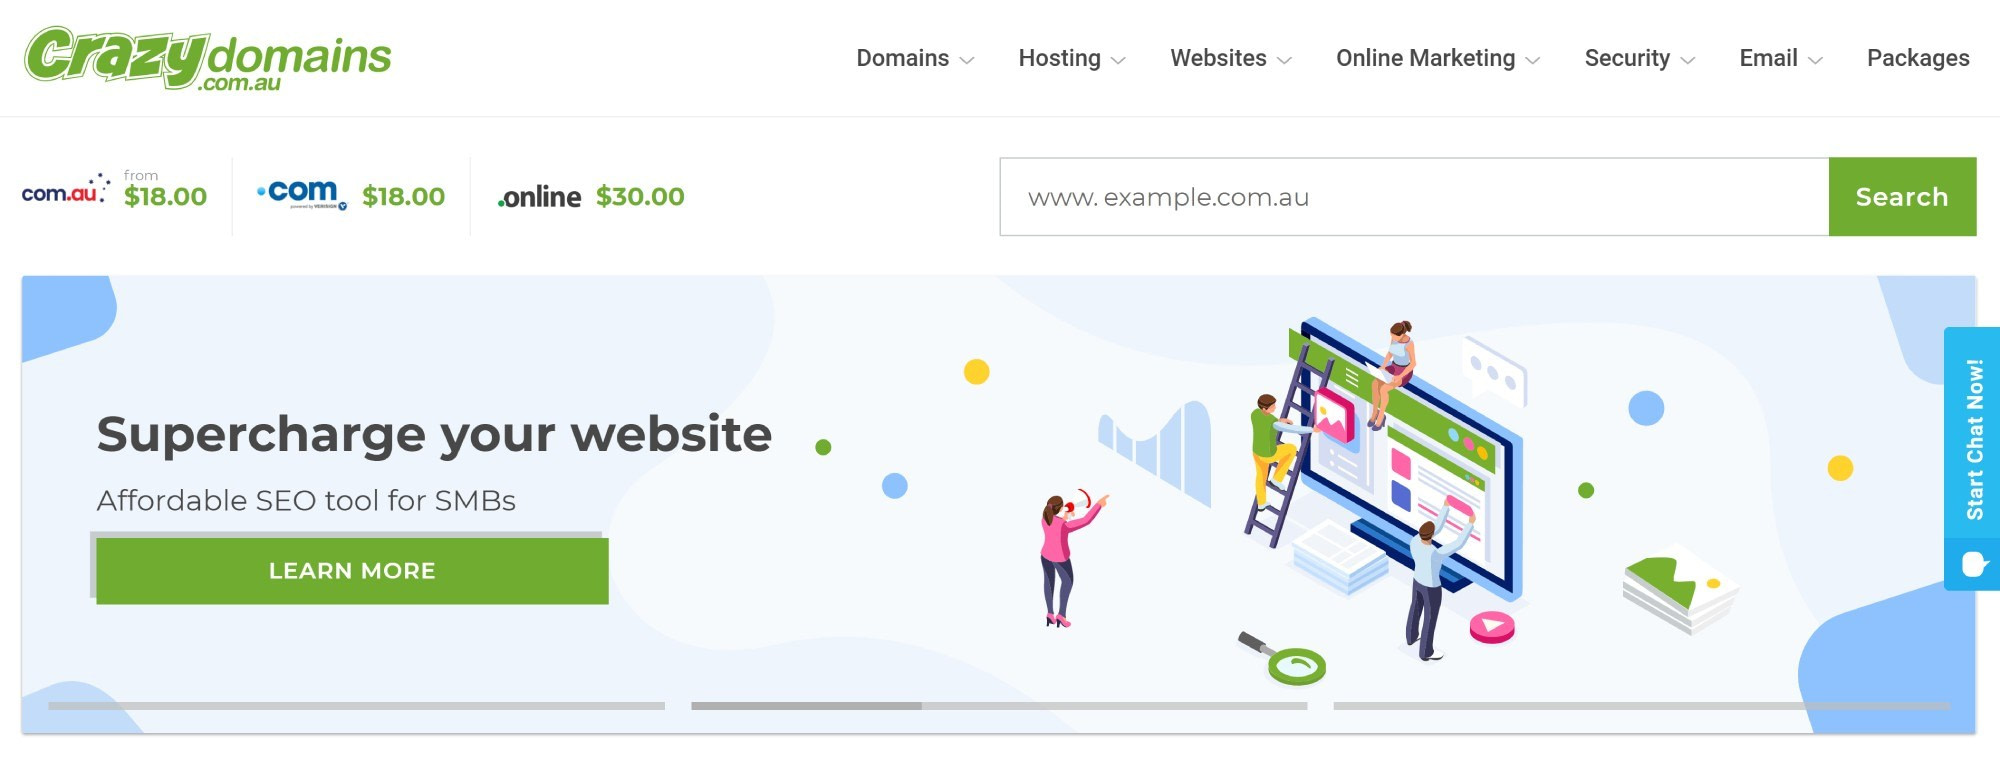 Best web hosting Australia: CrazyDomains